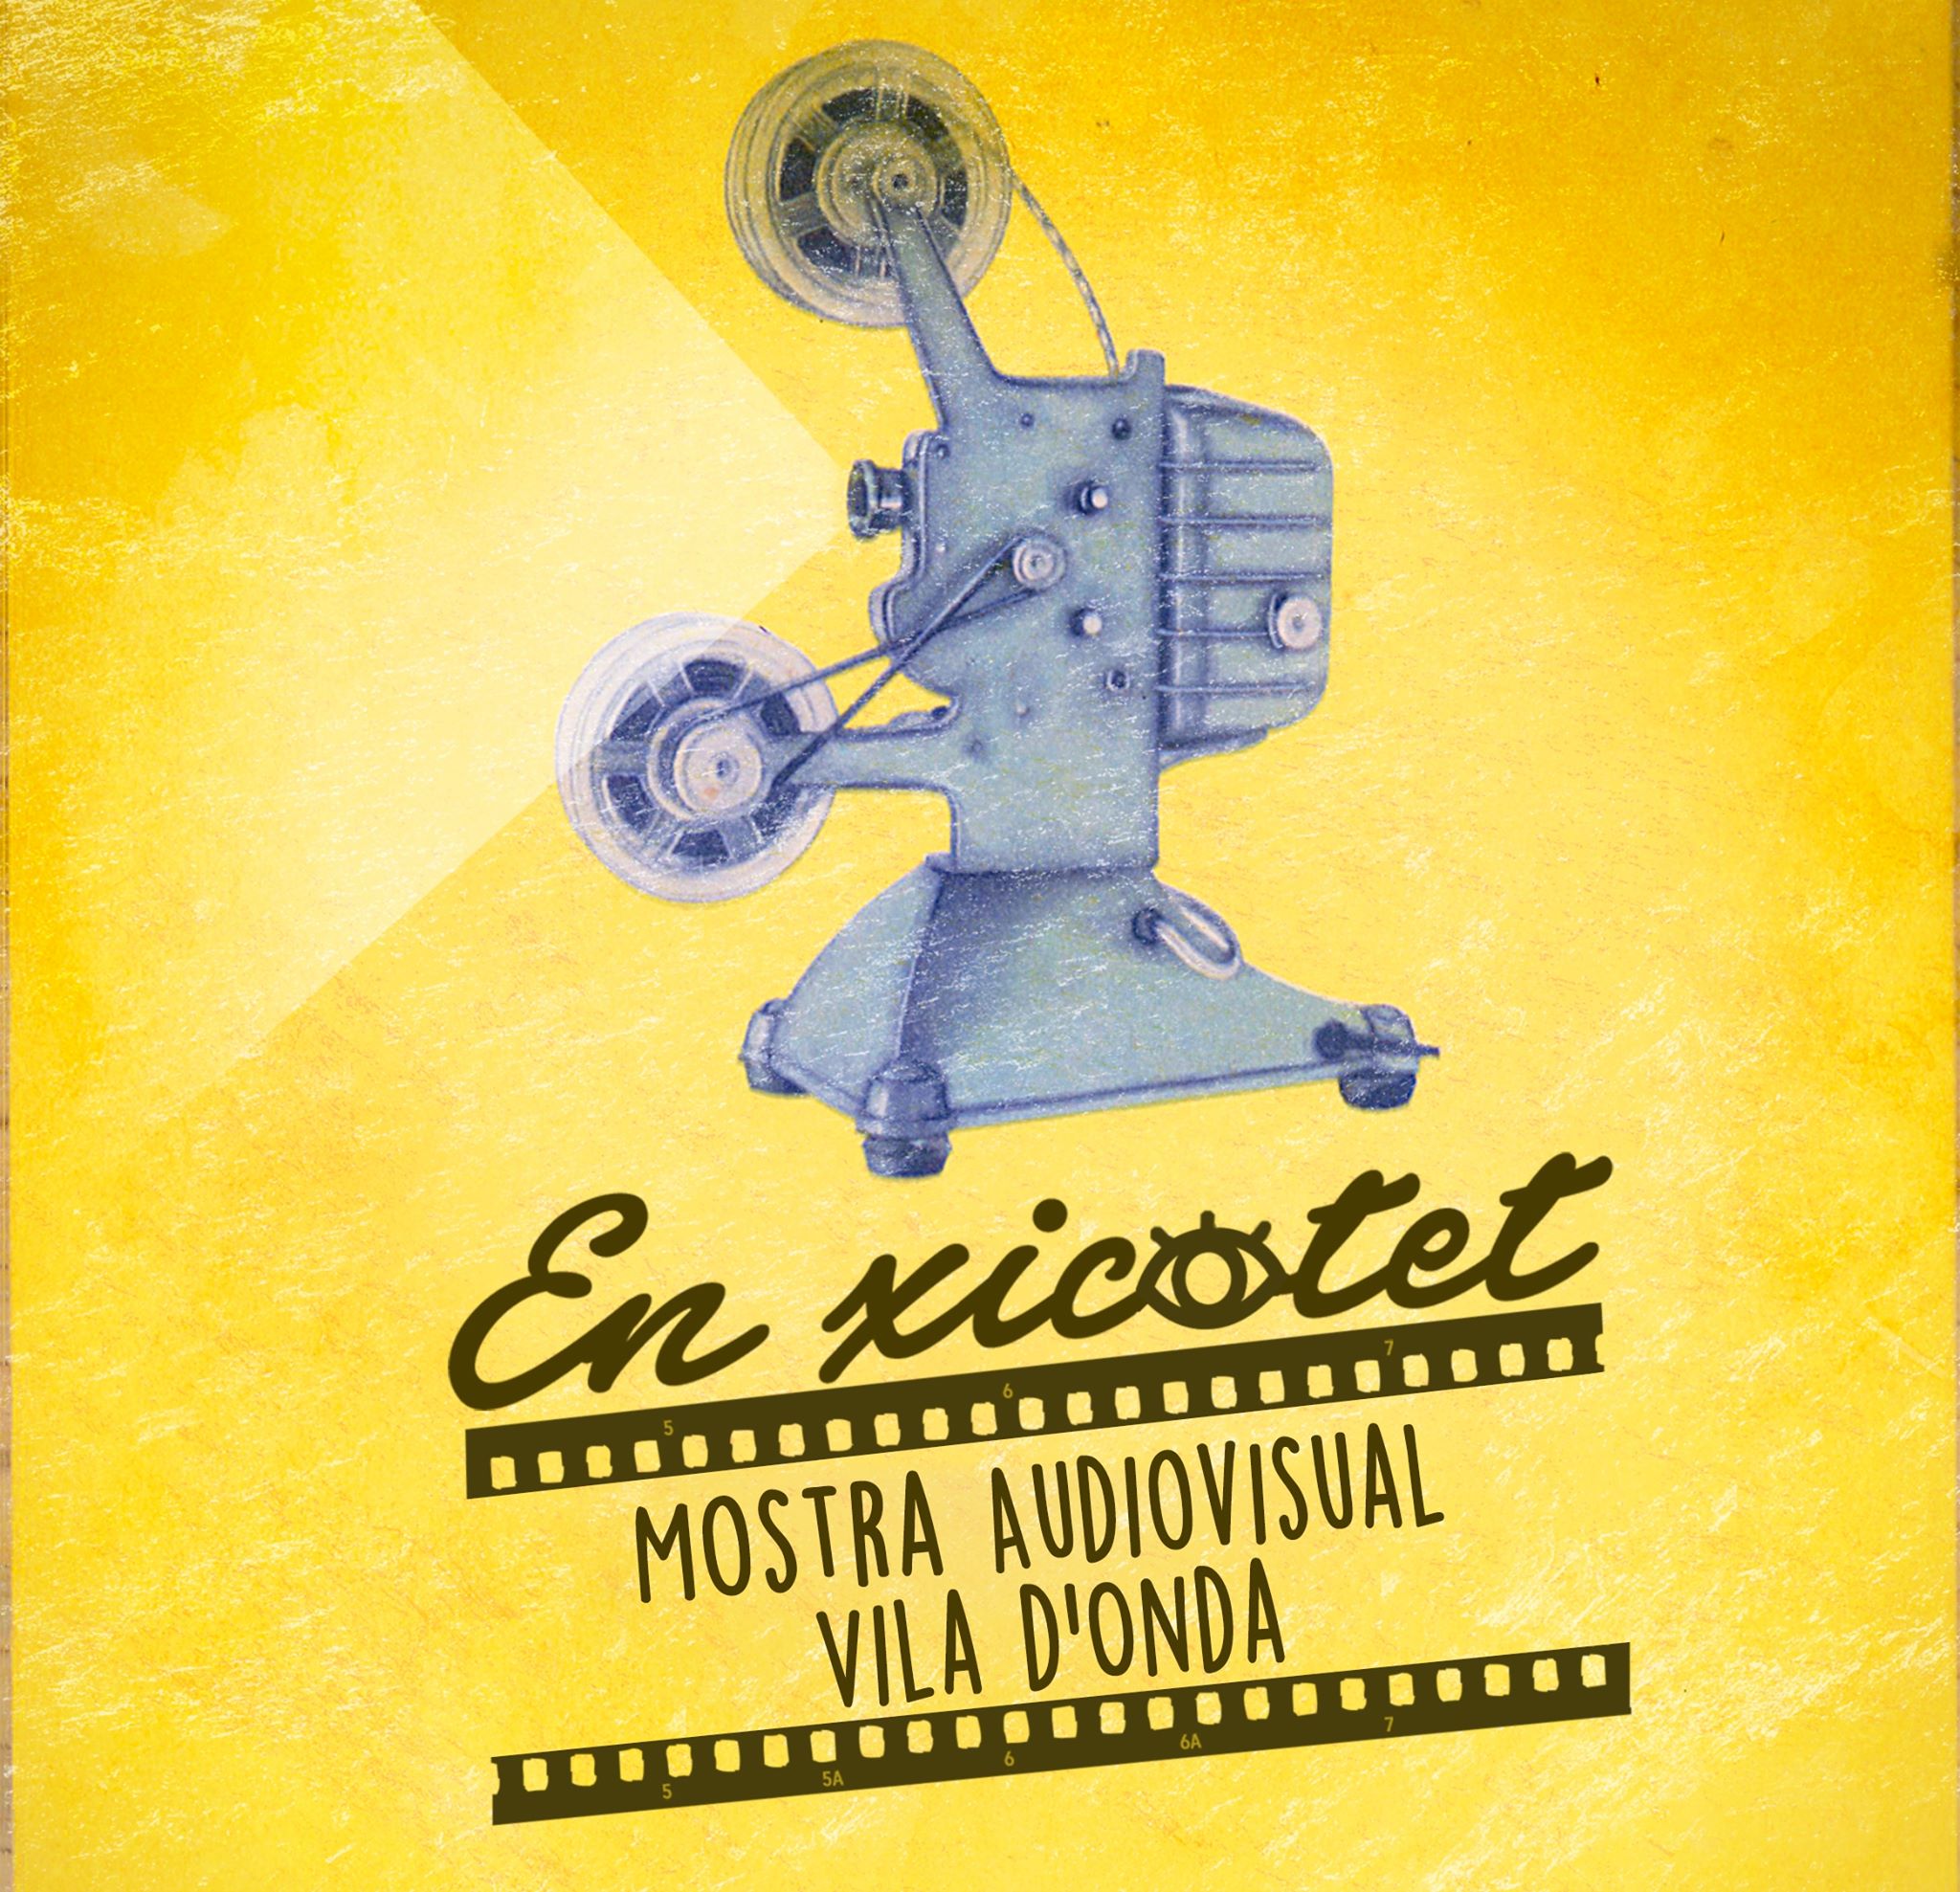 La ‘Mostra Audiovisual Vila d’Onda EN XICOTET’ presenta los cortometrajes seleccionados